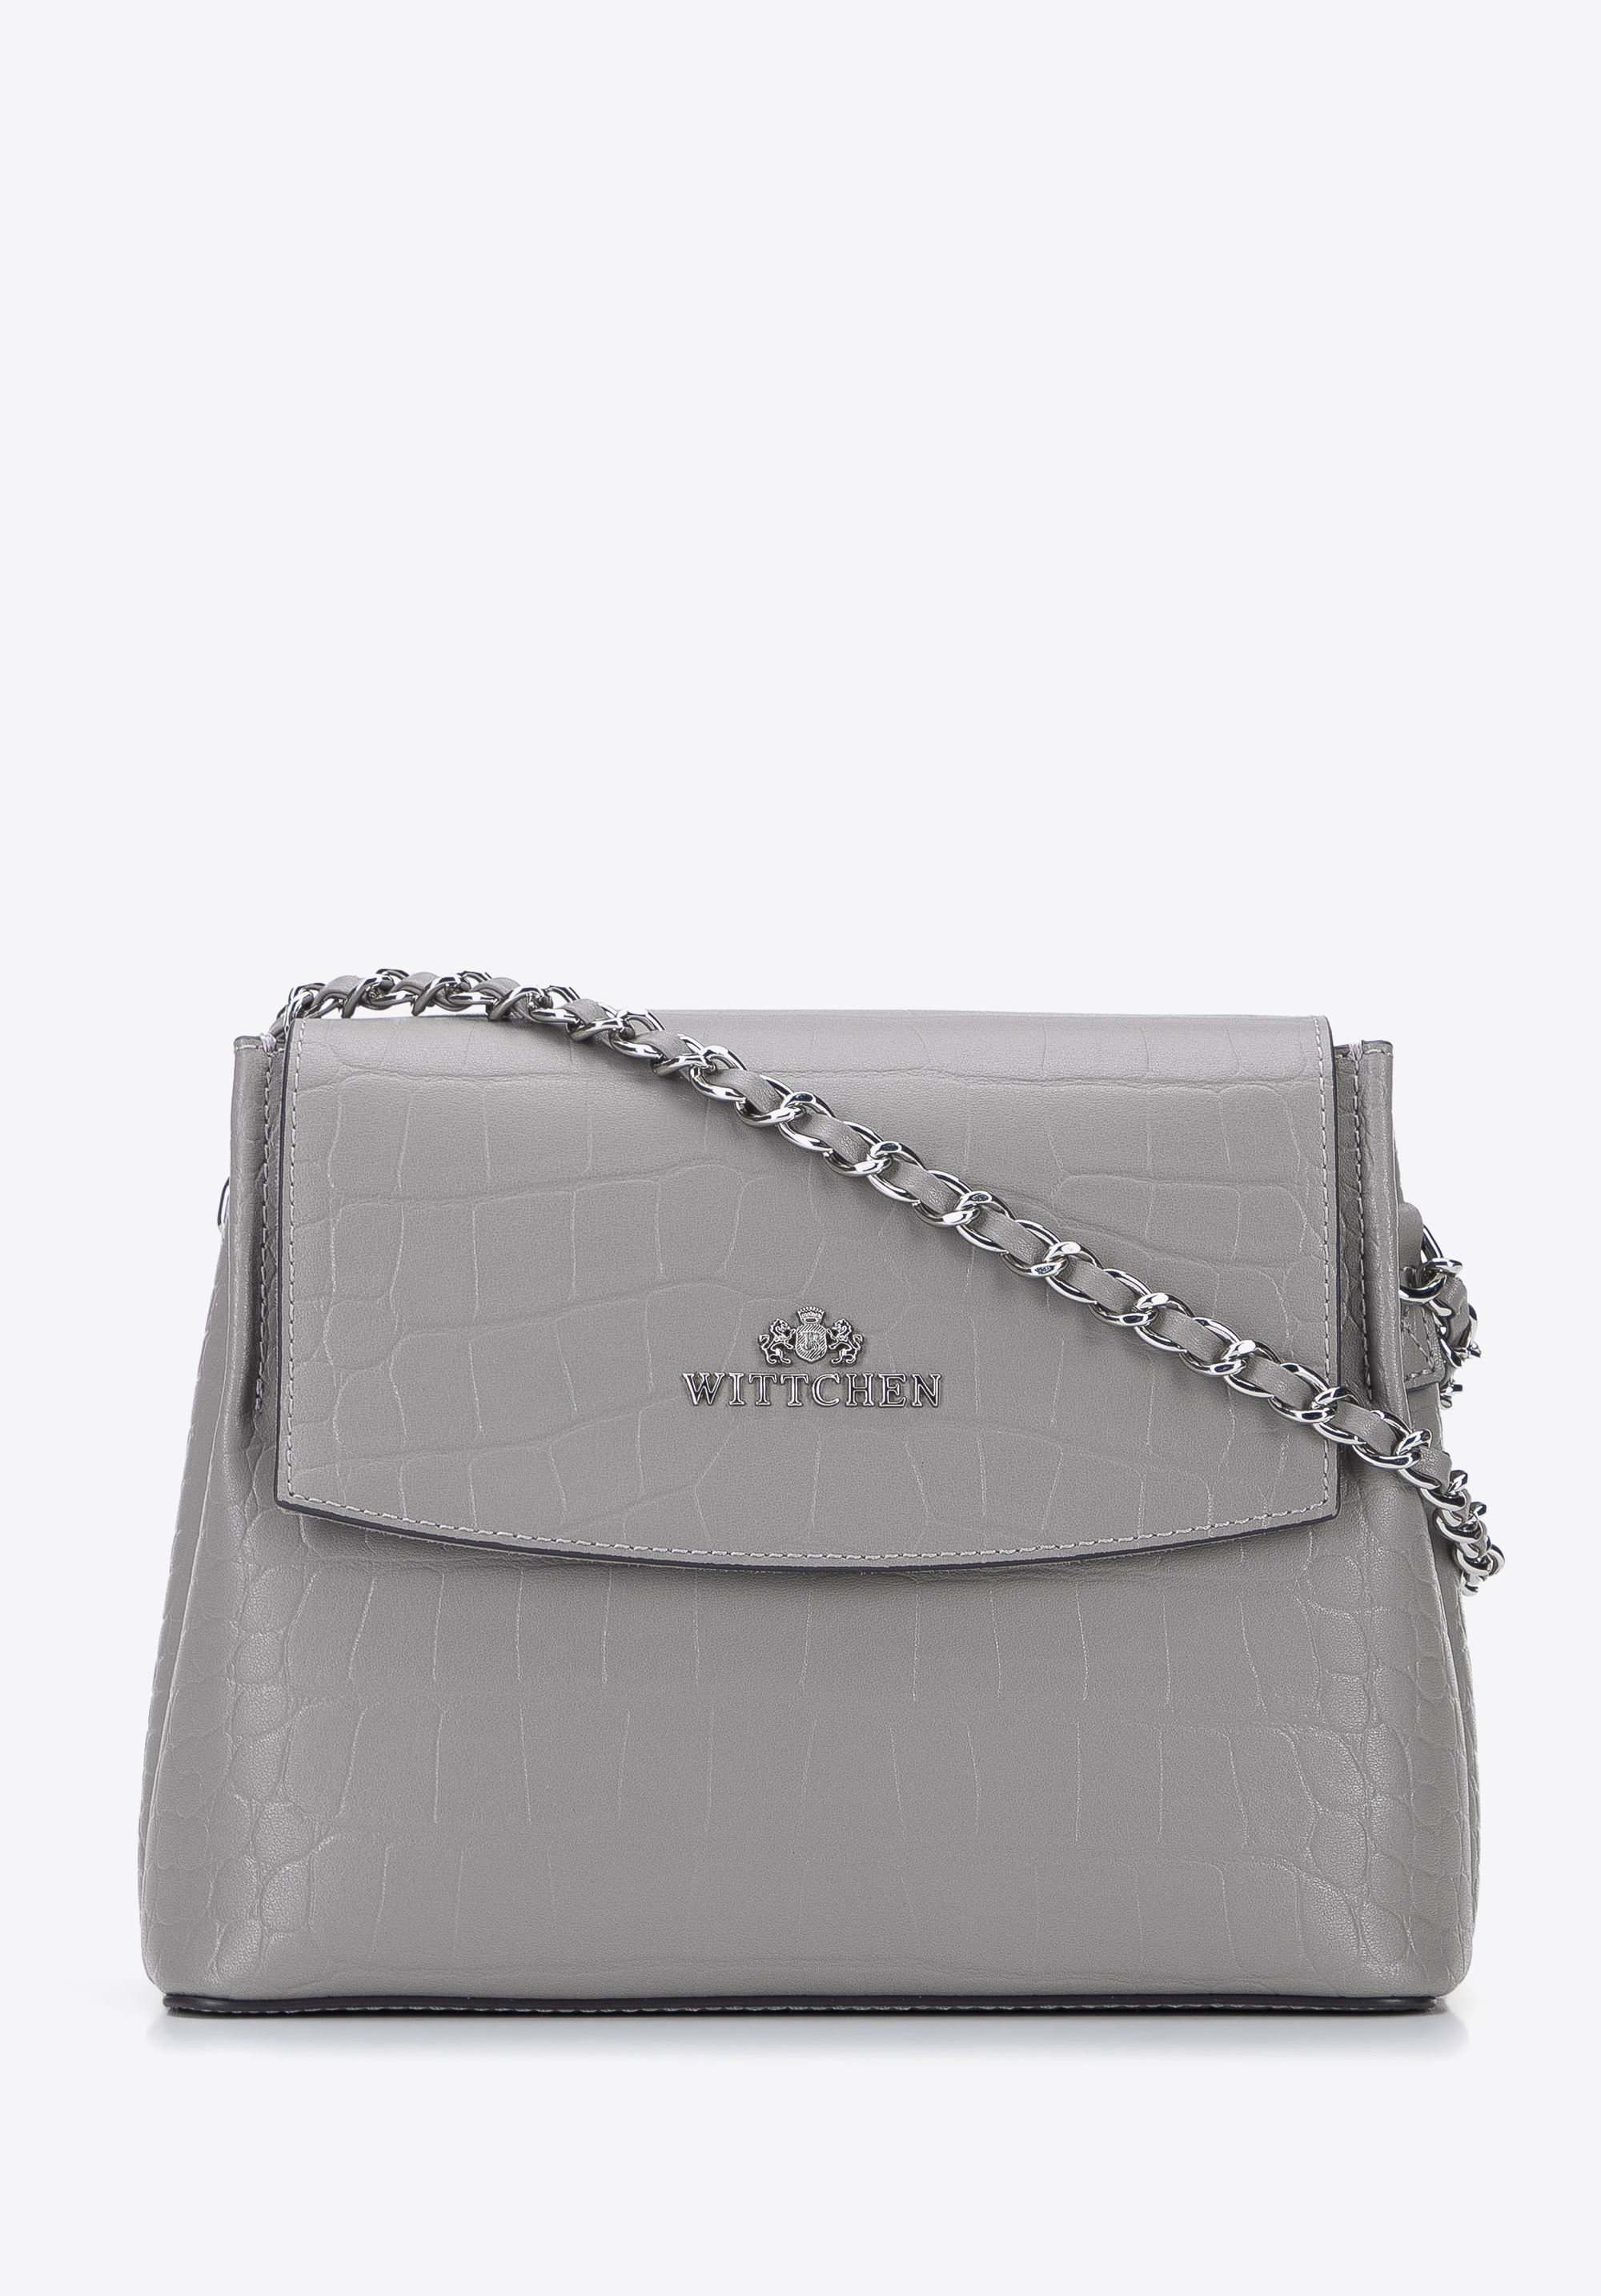 Women's leather chain shoulder strap handbag I WITTCHEN